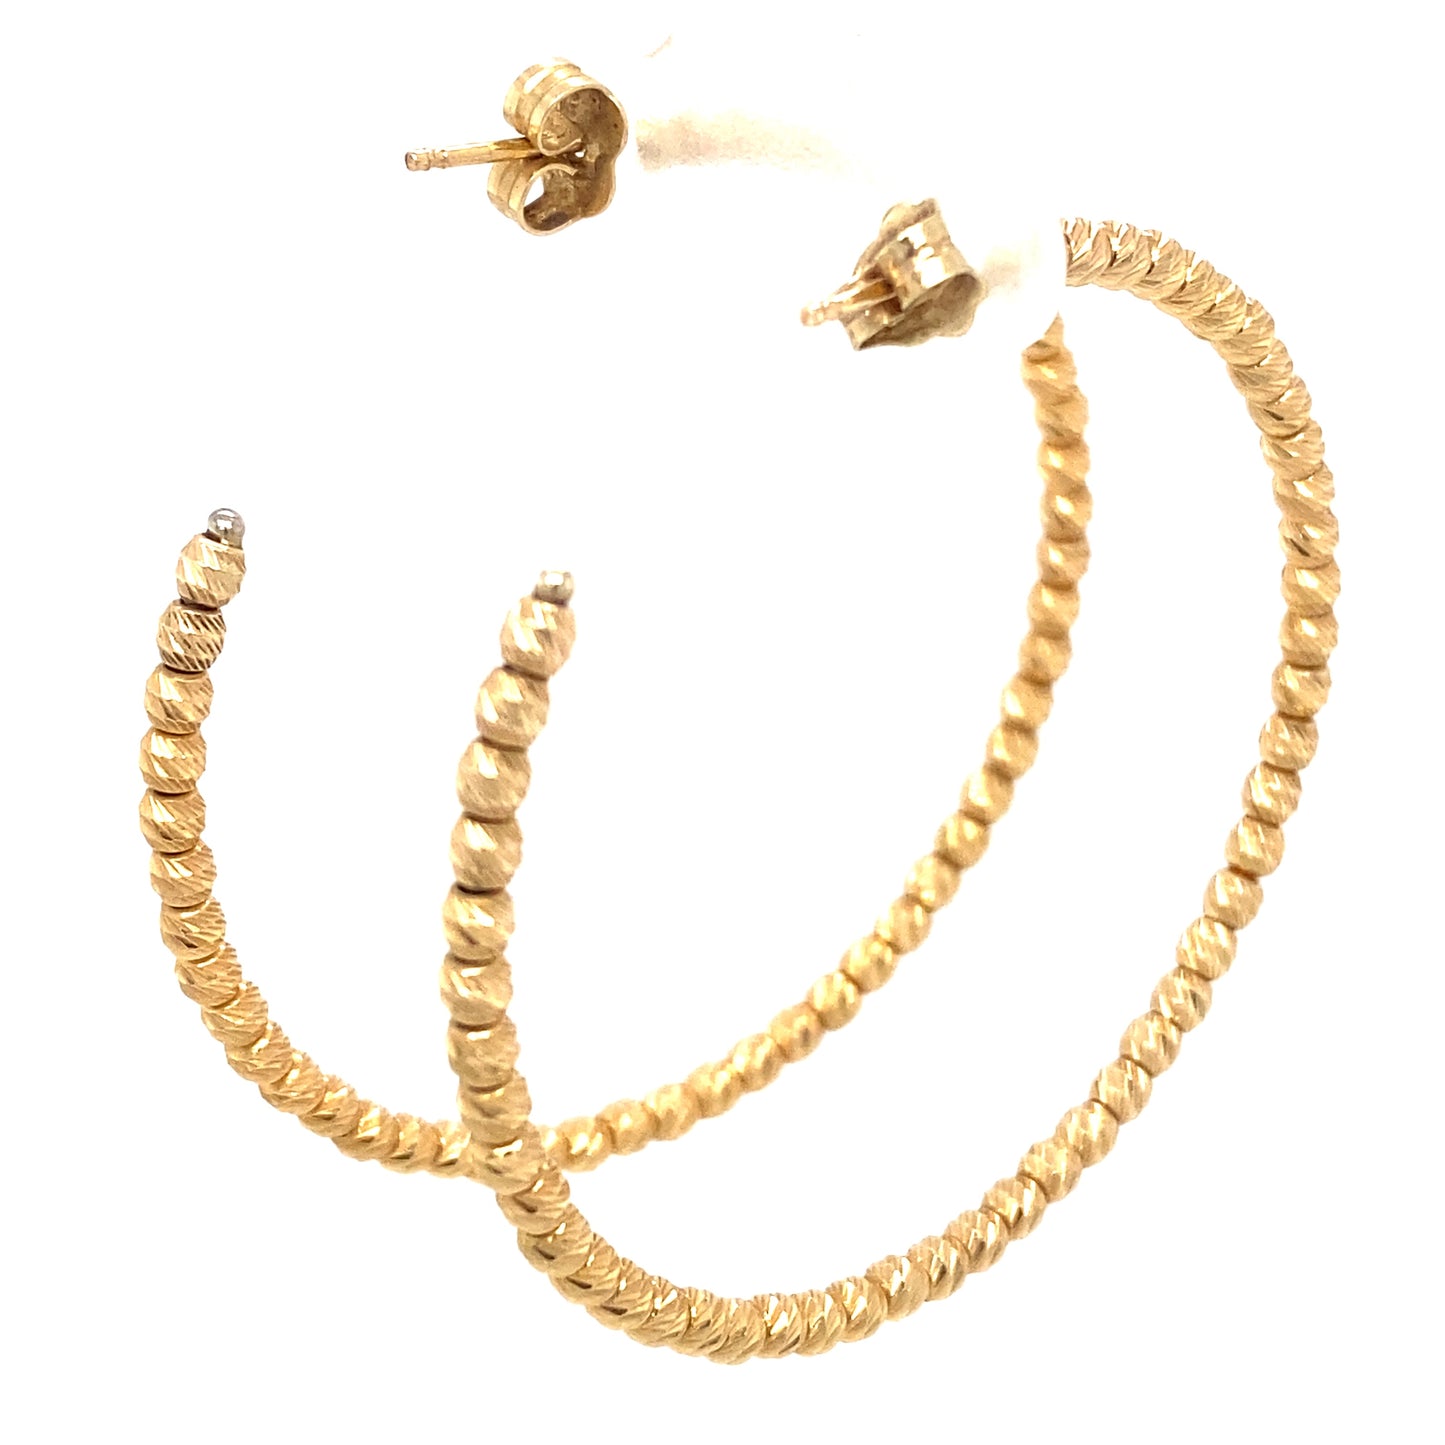 Circa 1970s Diamond Cut Bead Hoop Earrings in 14K Gold